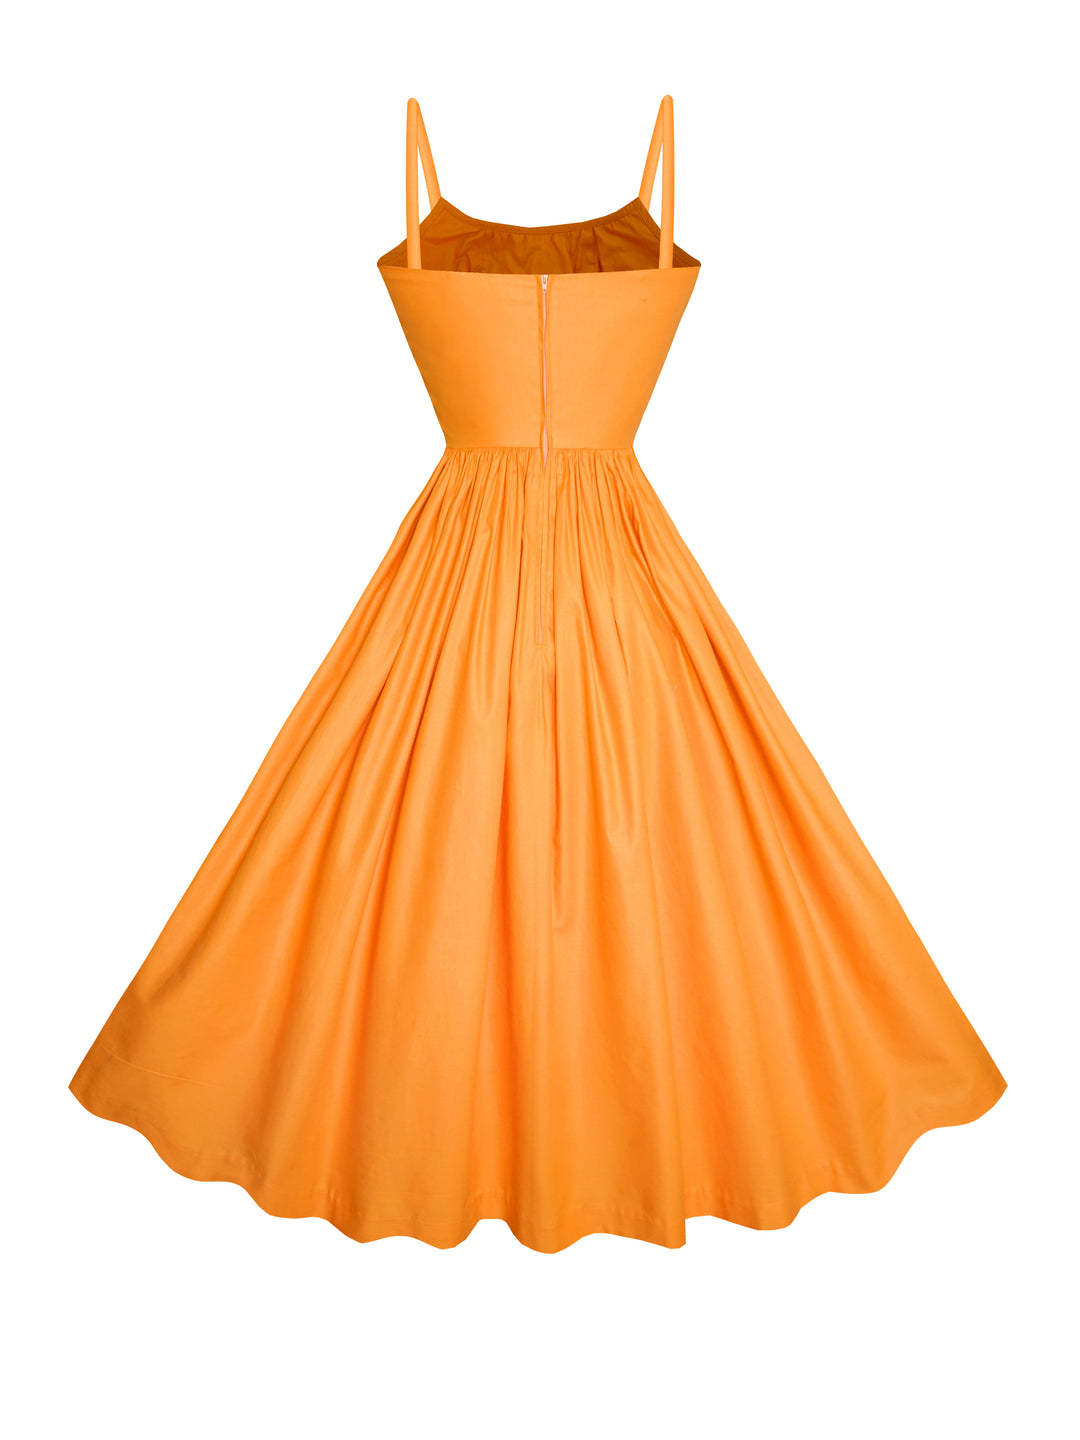 MTO - Grace Dress in Pumpkin Orange Cotton